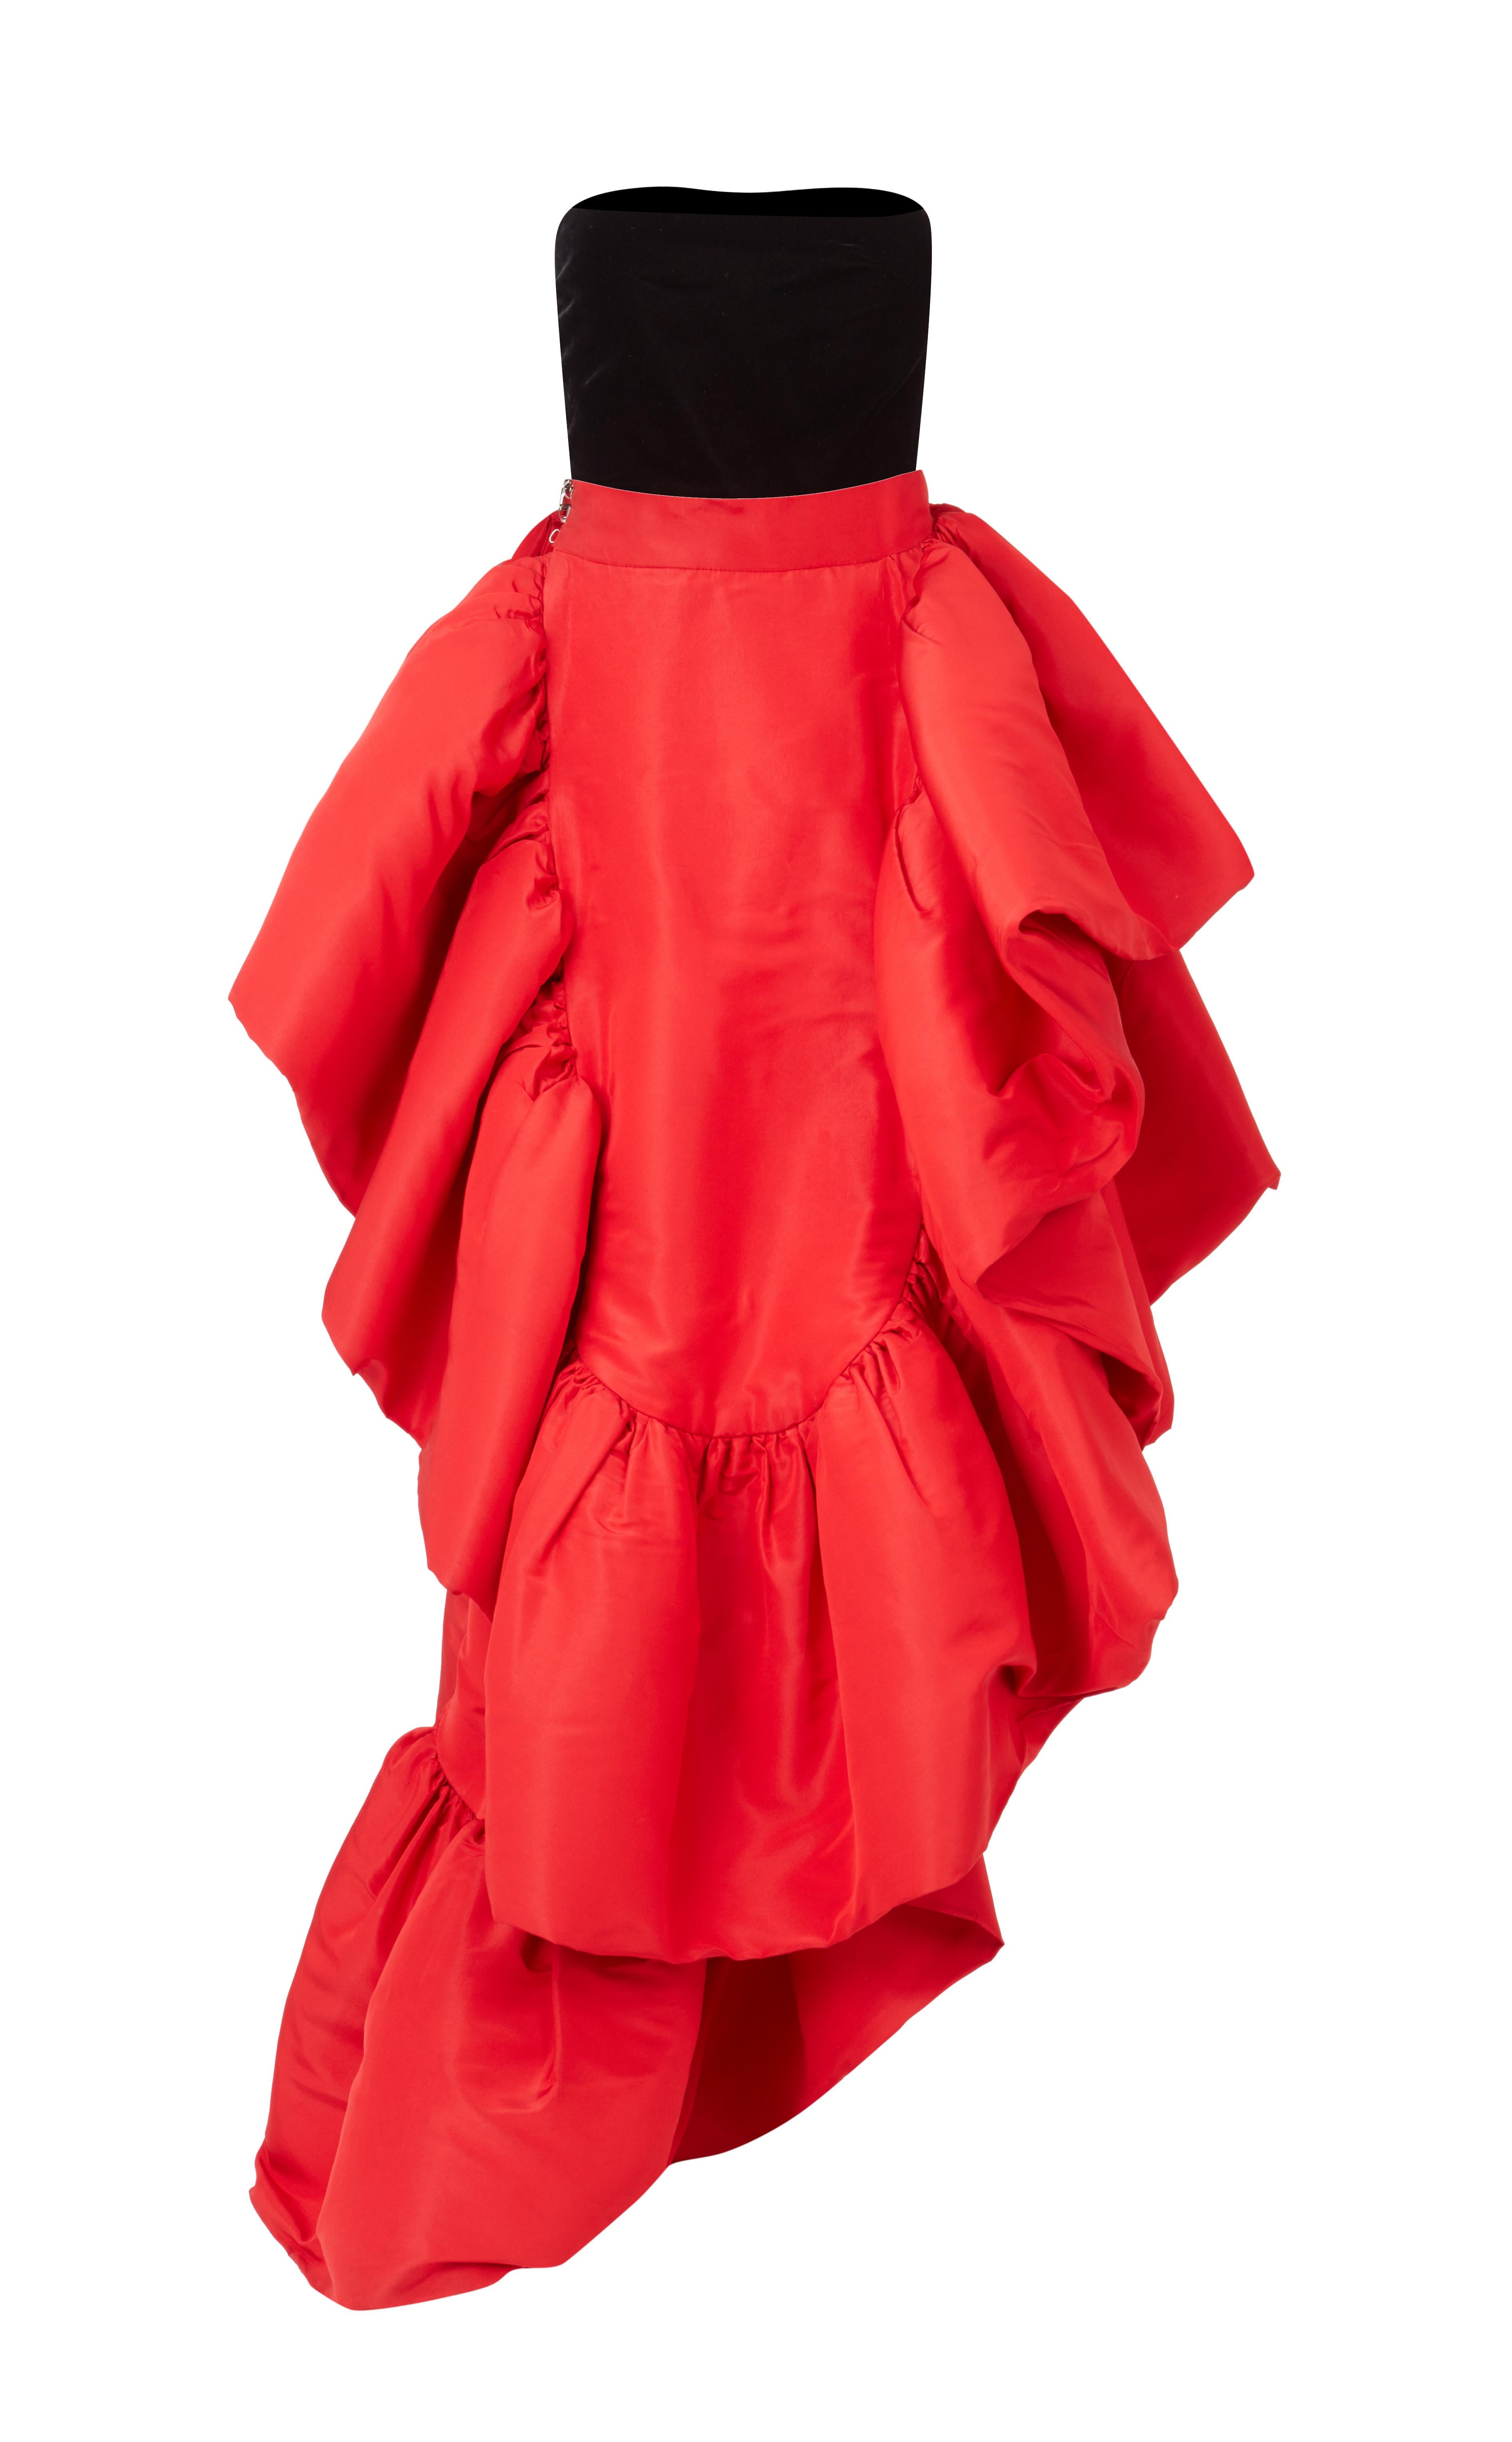 Pierre Cardin haute couture, with black velvet mini strapless dress and red ruffles skirt shorter on the front.